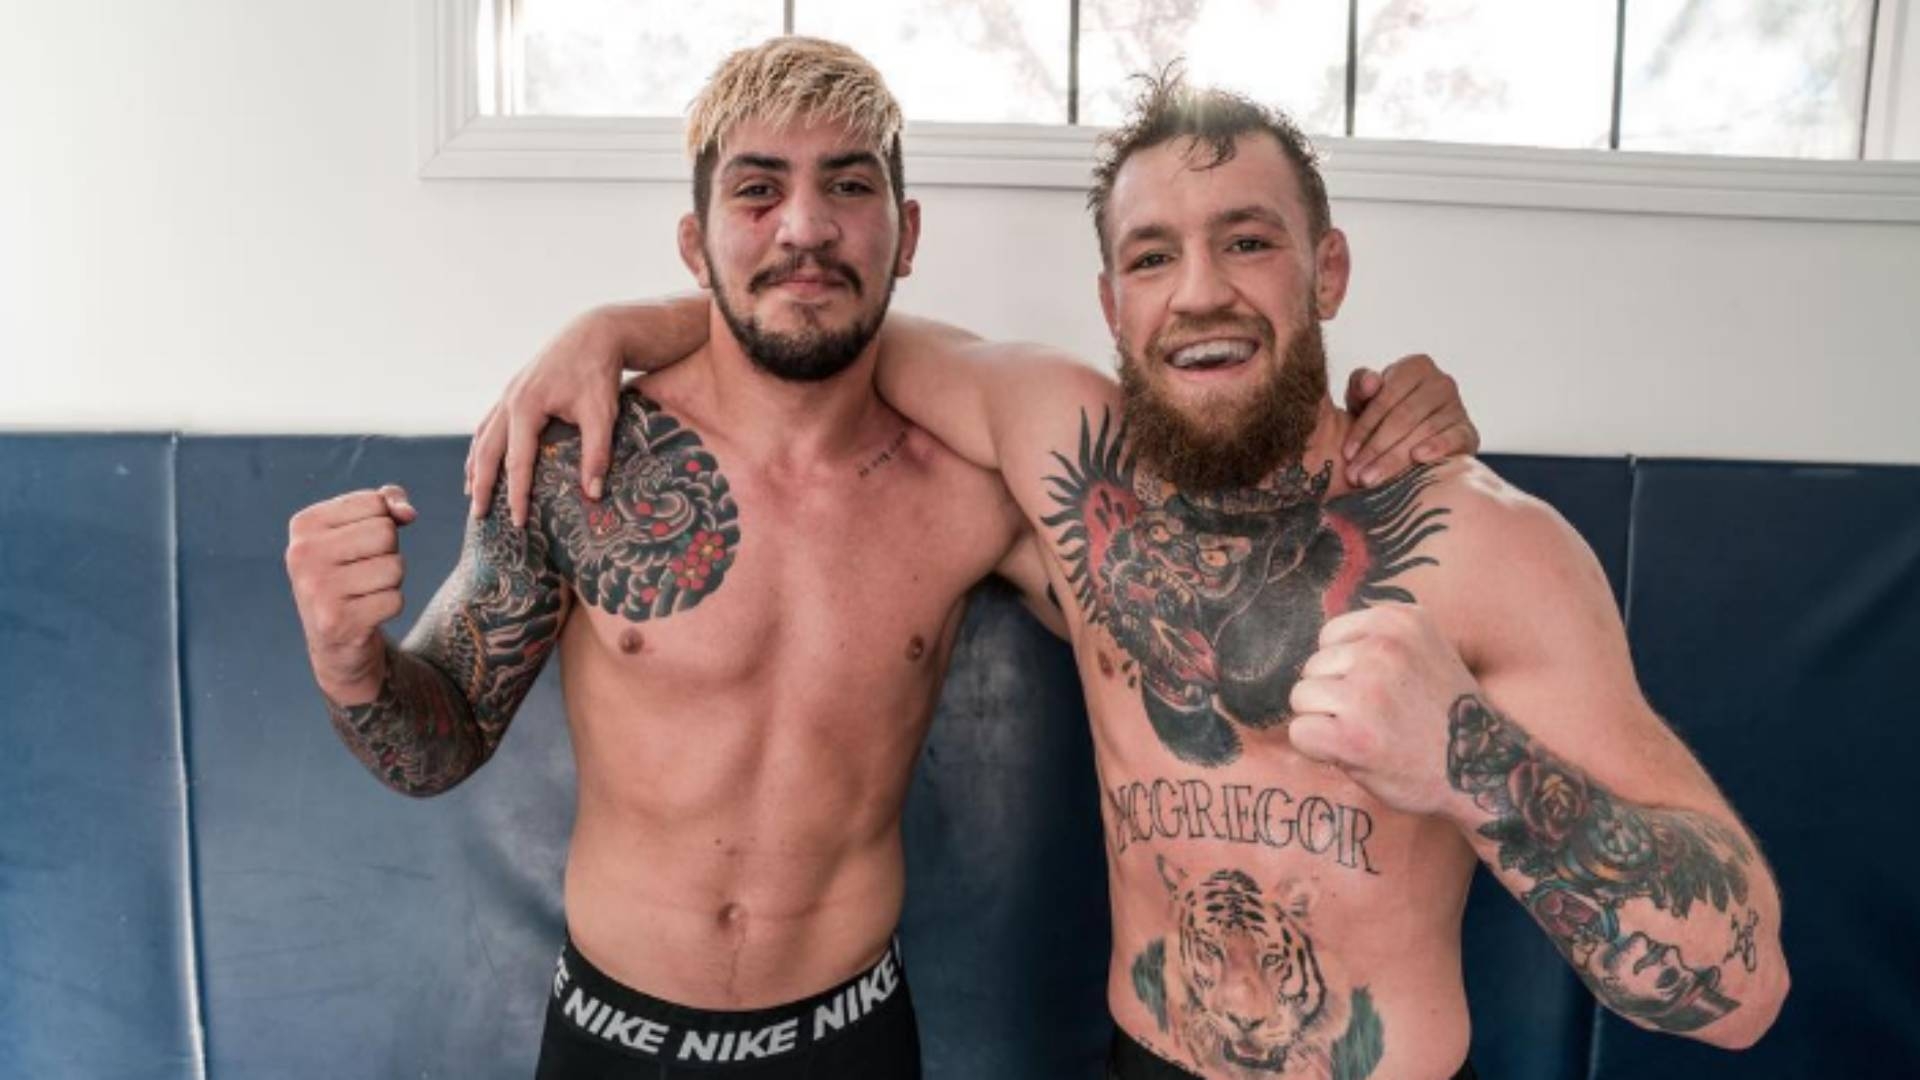 愛爾蘭格鬥天王 Conor McGregor 的柔術教練、同時也是 MMA 選手的 Dillon Danis 向 Jake Paul 嗆聲